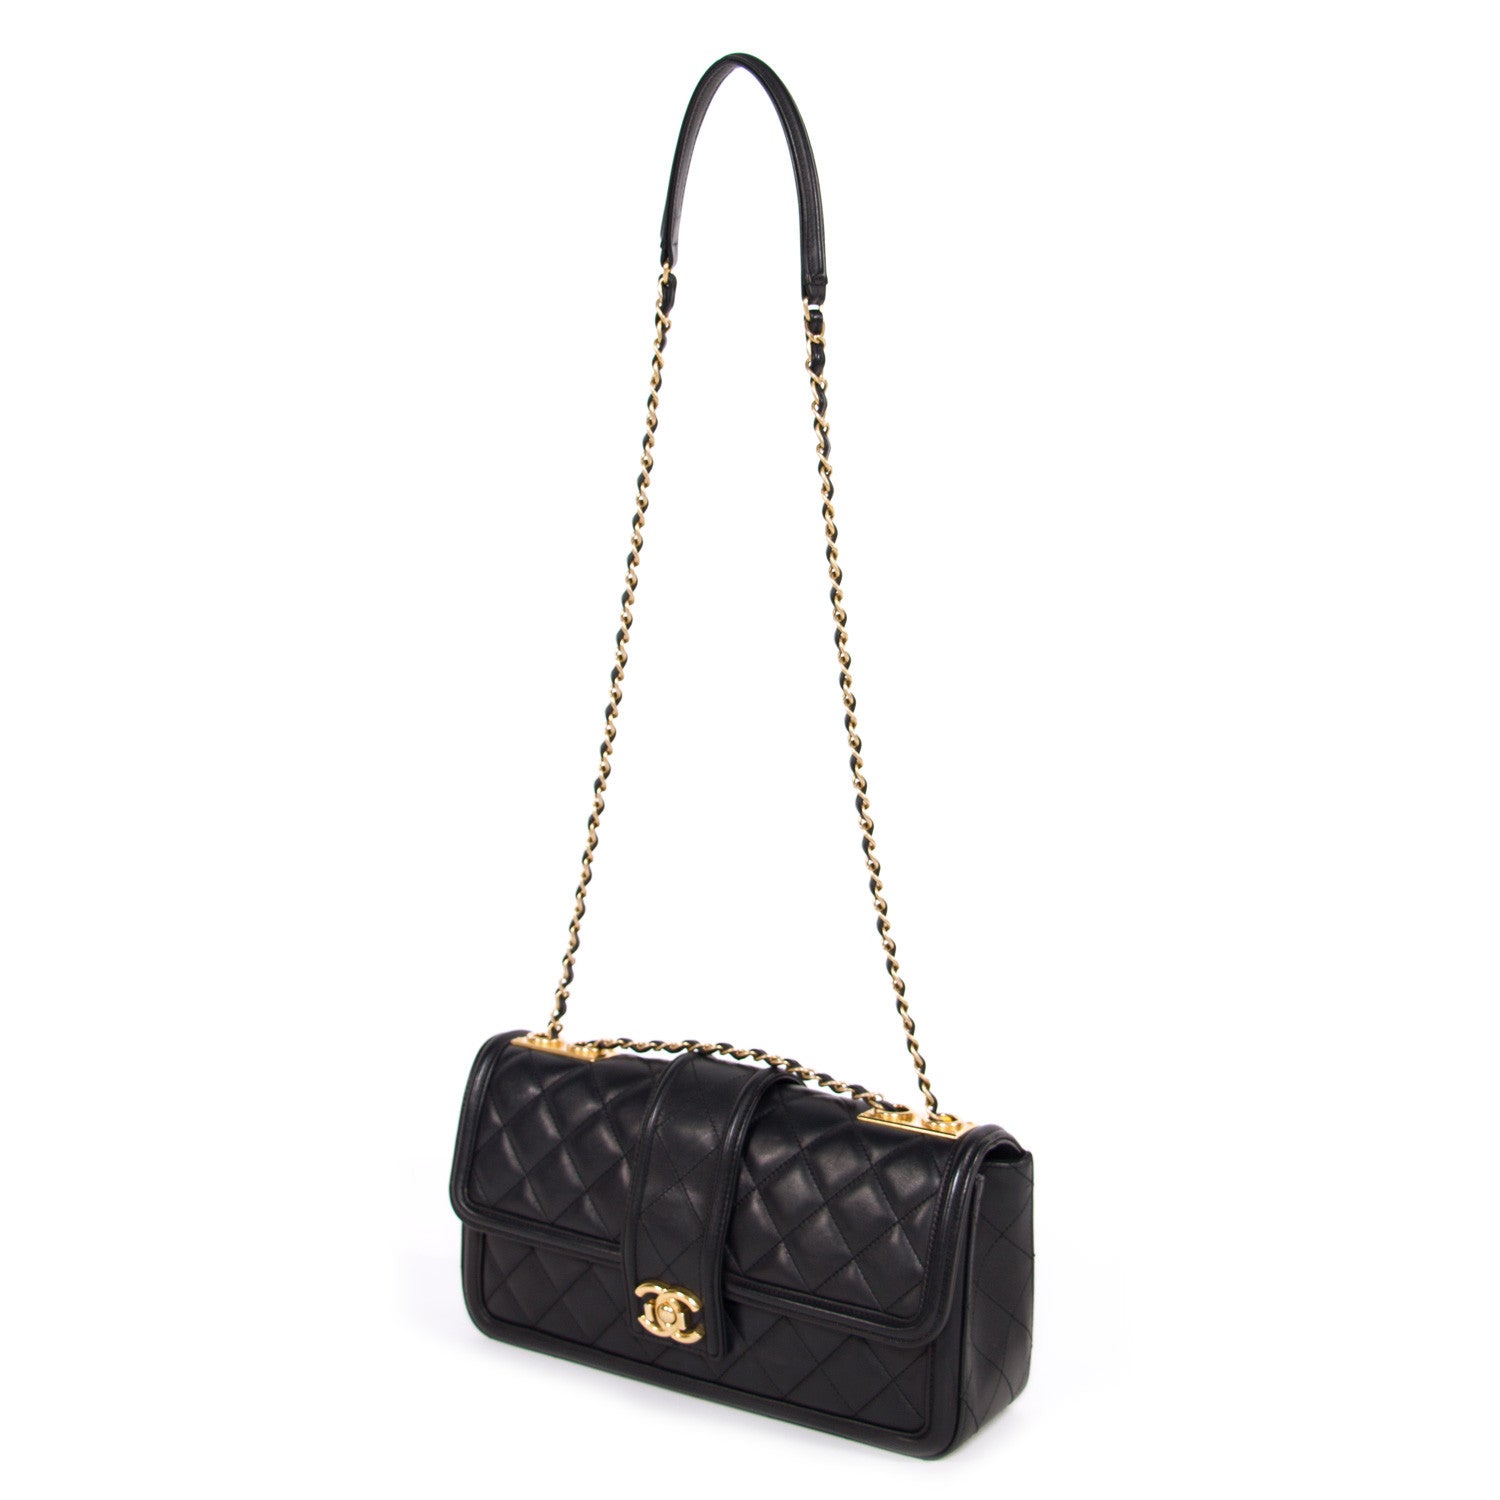 Shop authentic Chanel Elegant CC Flap Bag at revogue for just USD 2,500.00